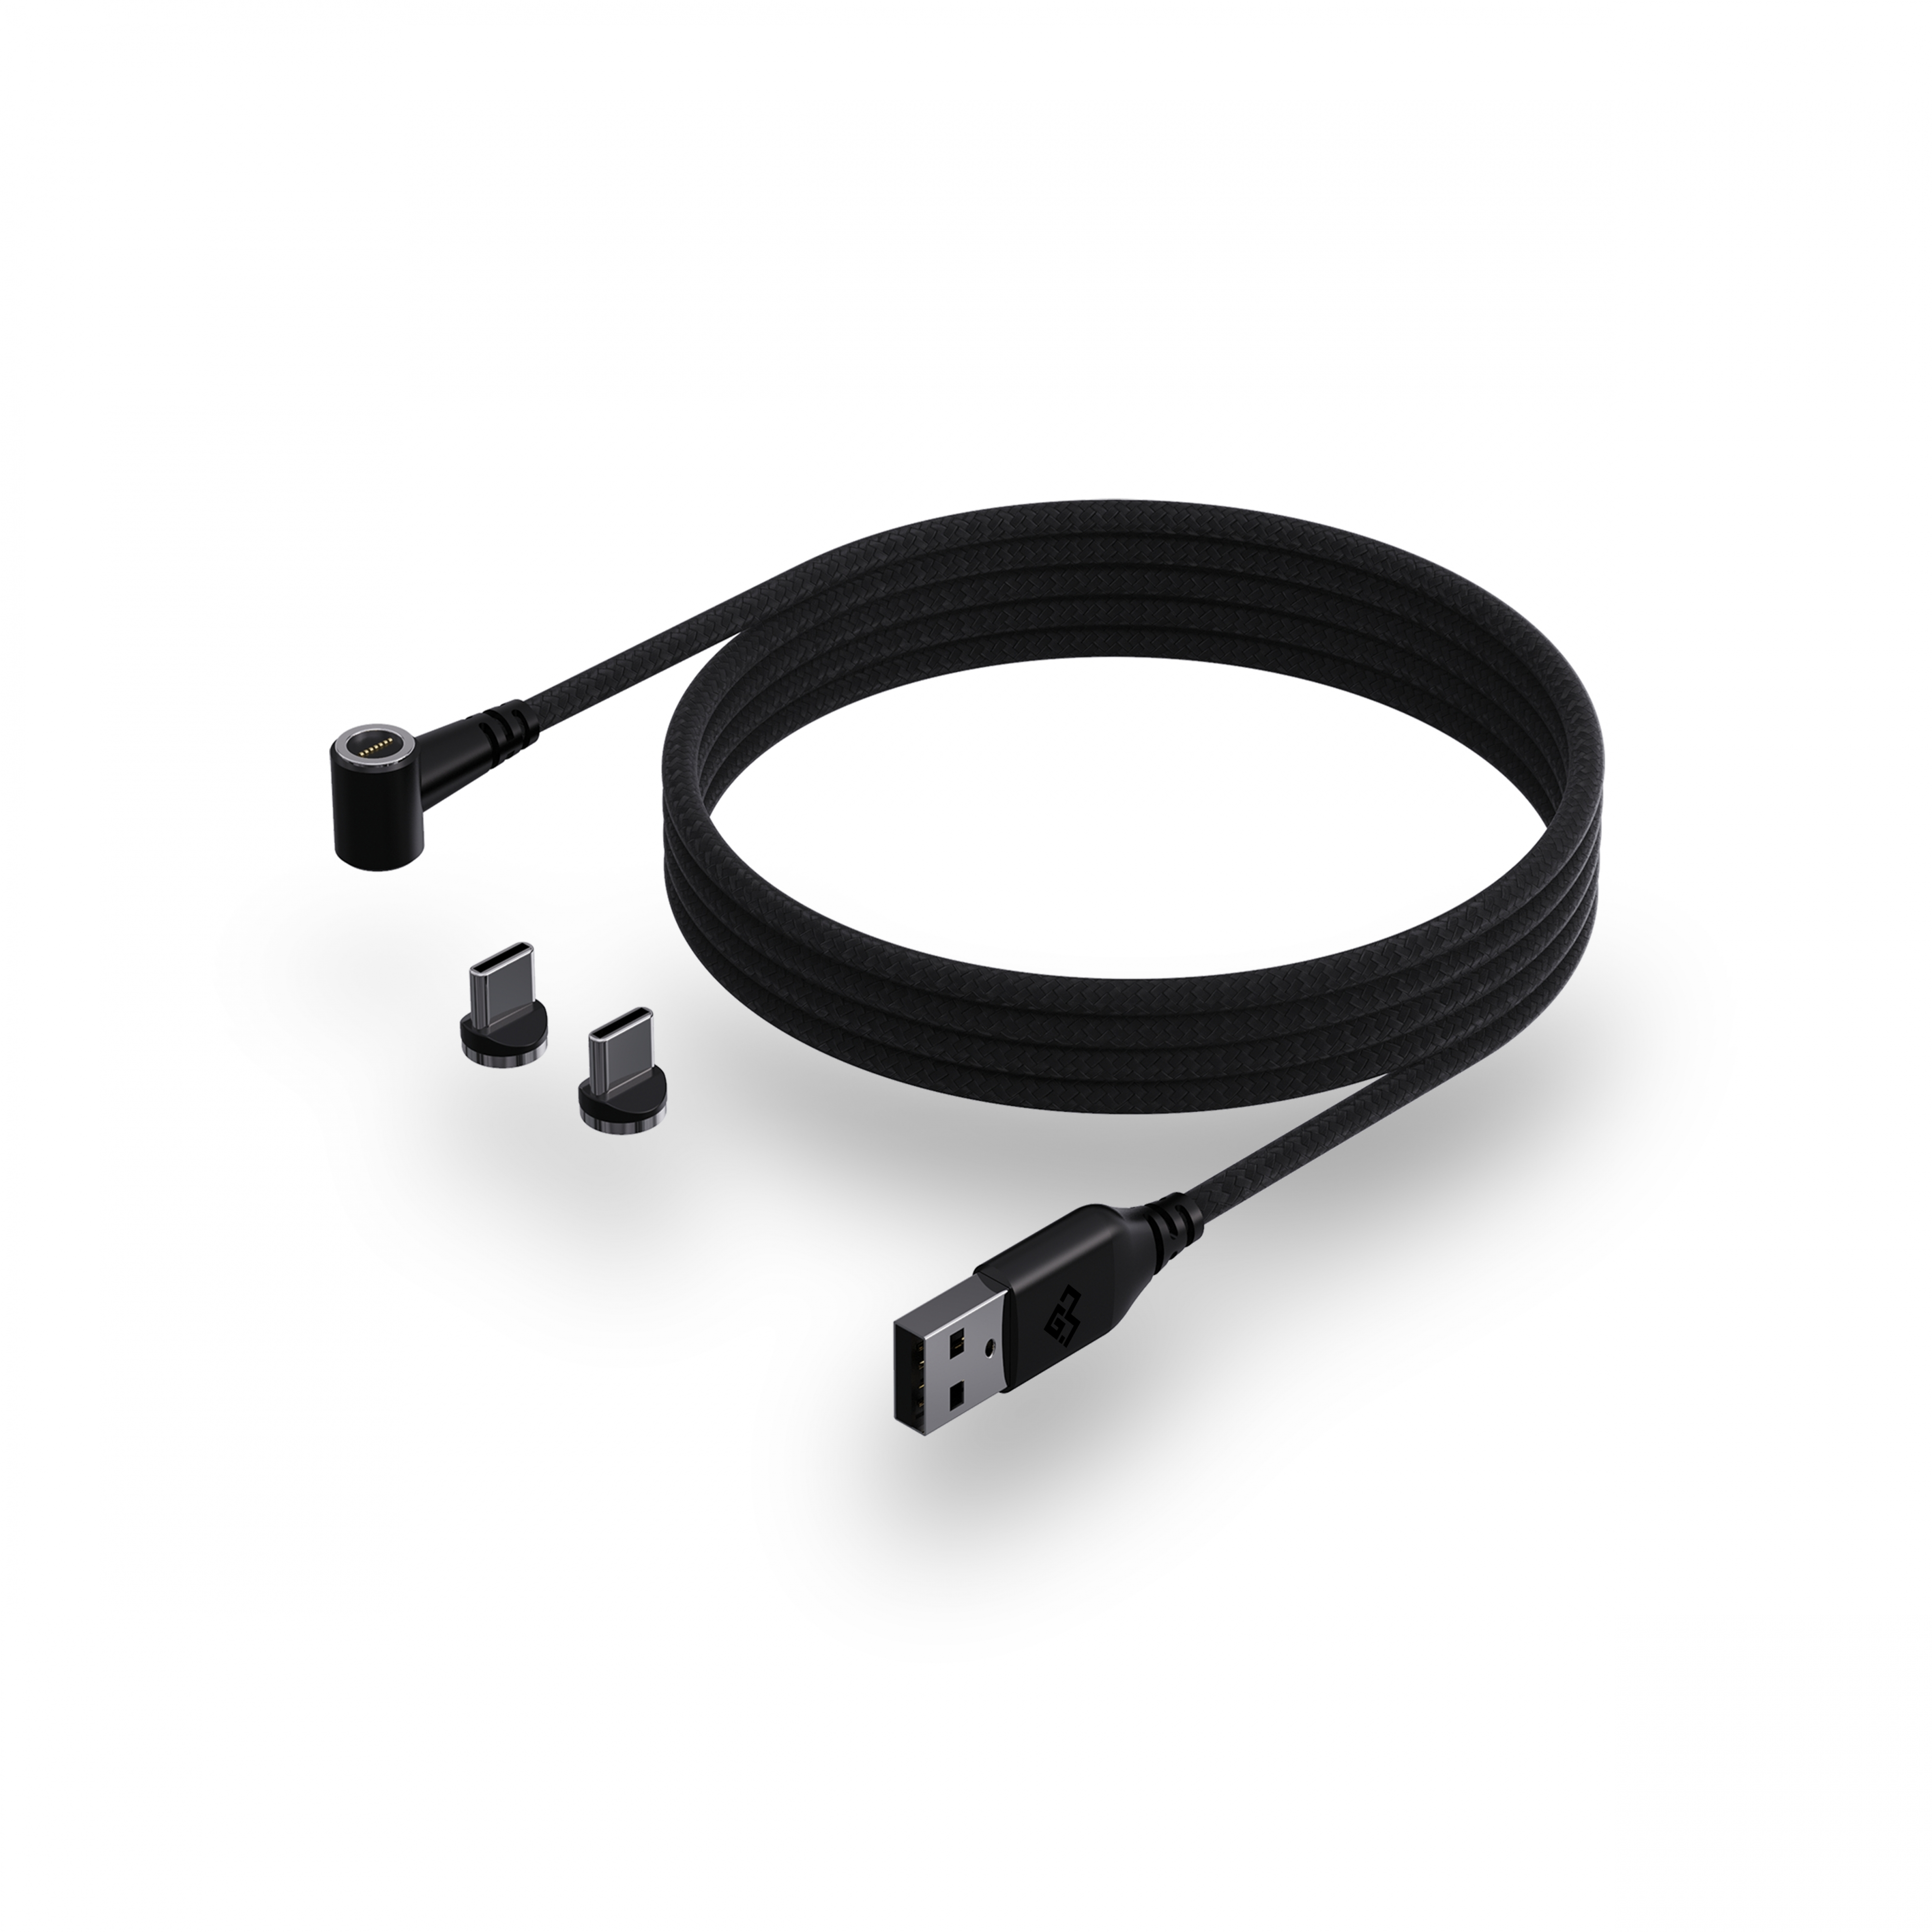 X 3m Series MILLENIUM Xbox für Cable Ladekabel Series Xbox X Magnetic